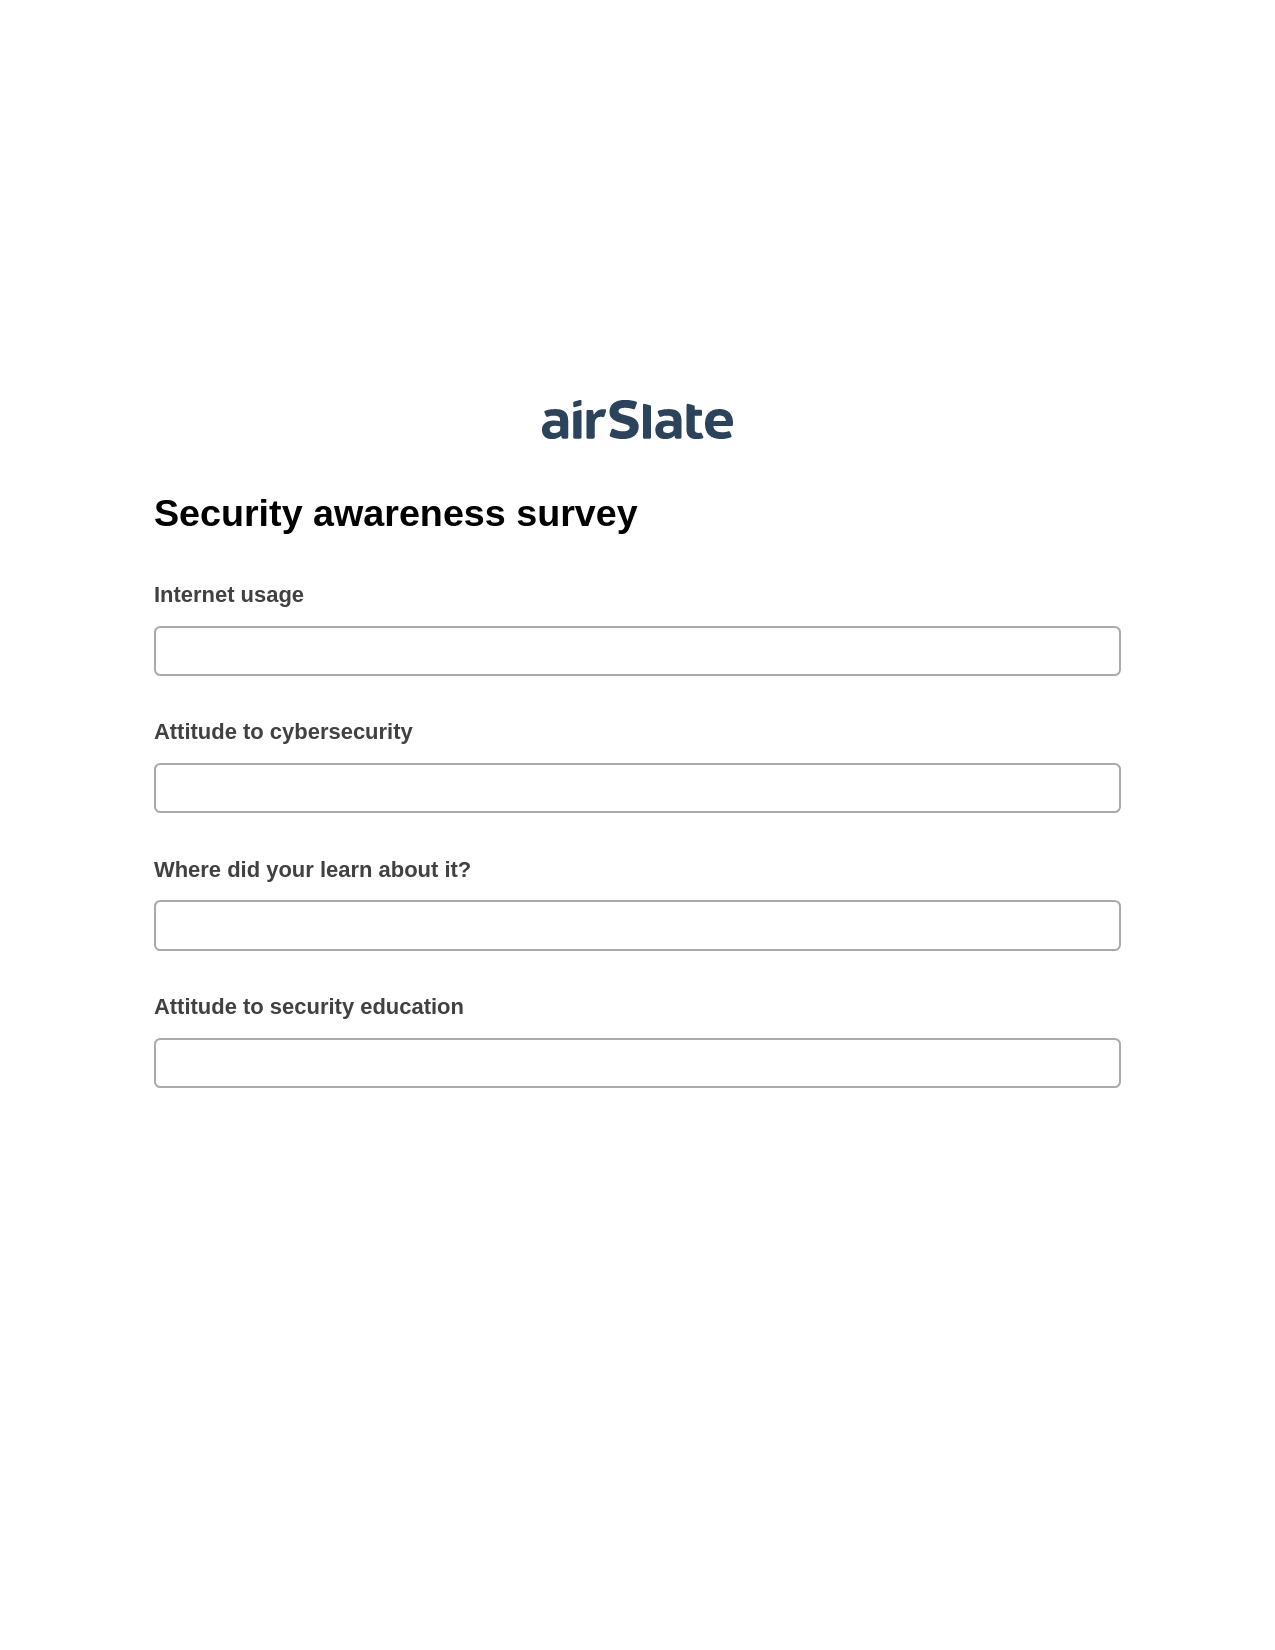 Security awareness survey Pre-fill from MySQL Dropdown Options Bot, Google Calendar Bot, Dropbox Bot